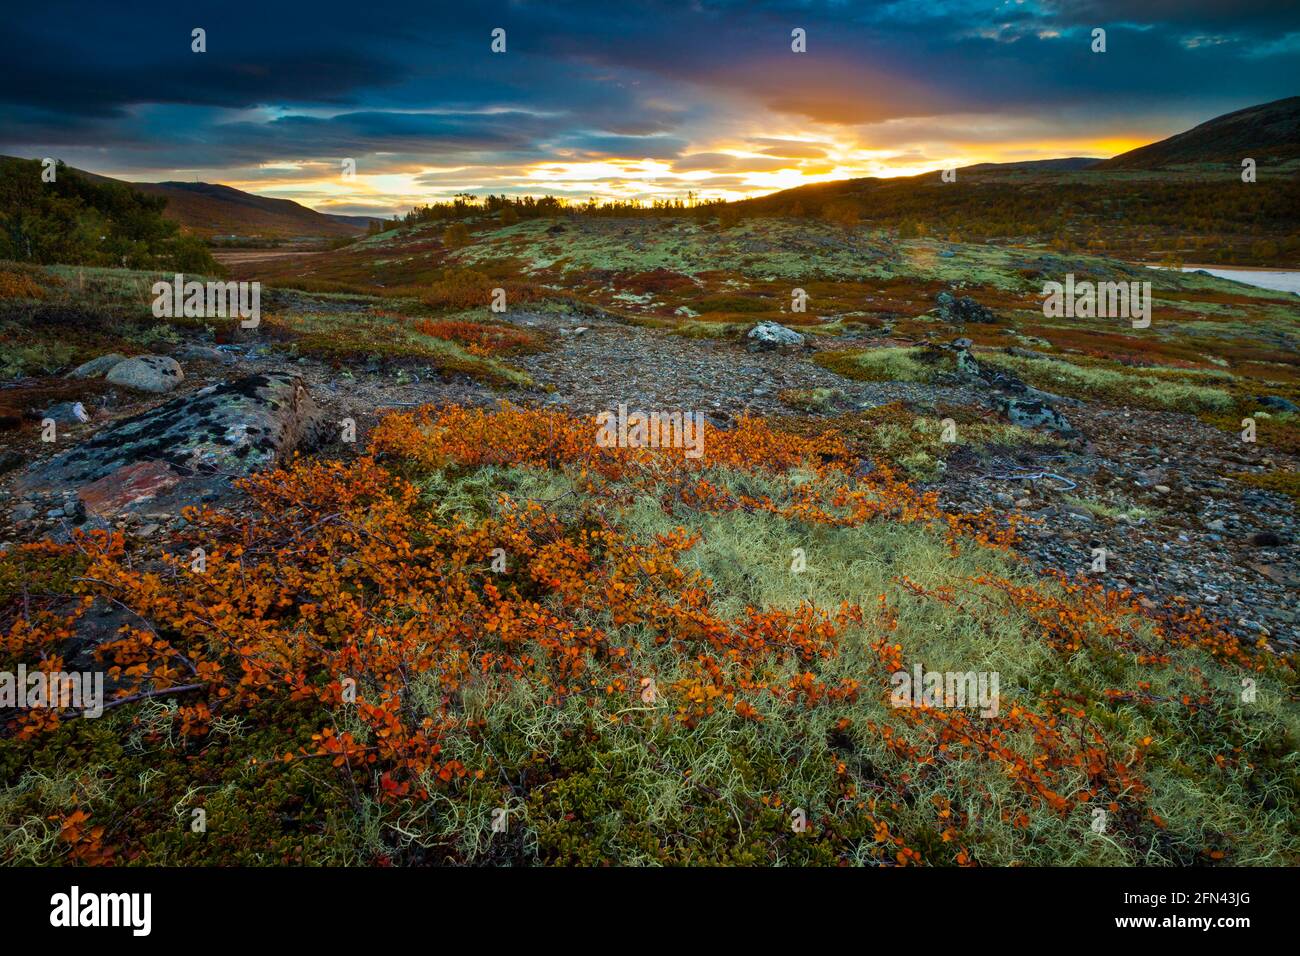 Mountain landscape with autumn colors and striking colorful sunrise near the lake Avsjøen at Dovrefjell, Dovre kommune, Norway, Scandinavia. Stock Photo